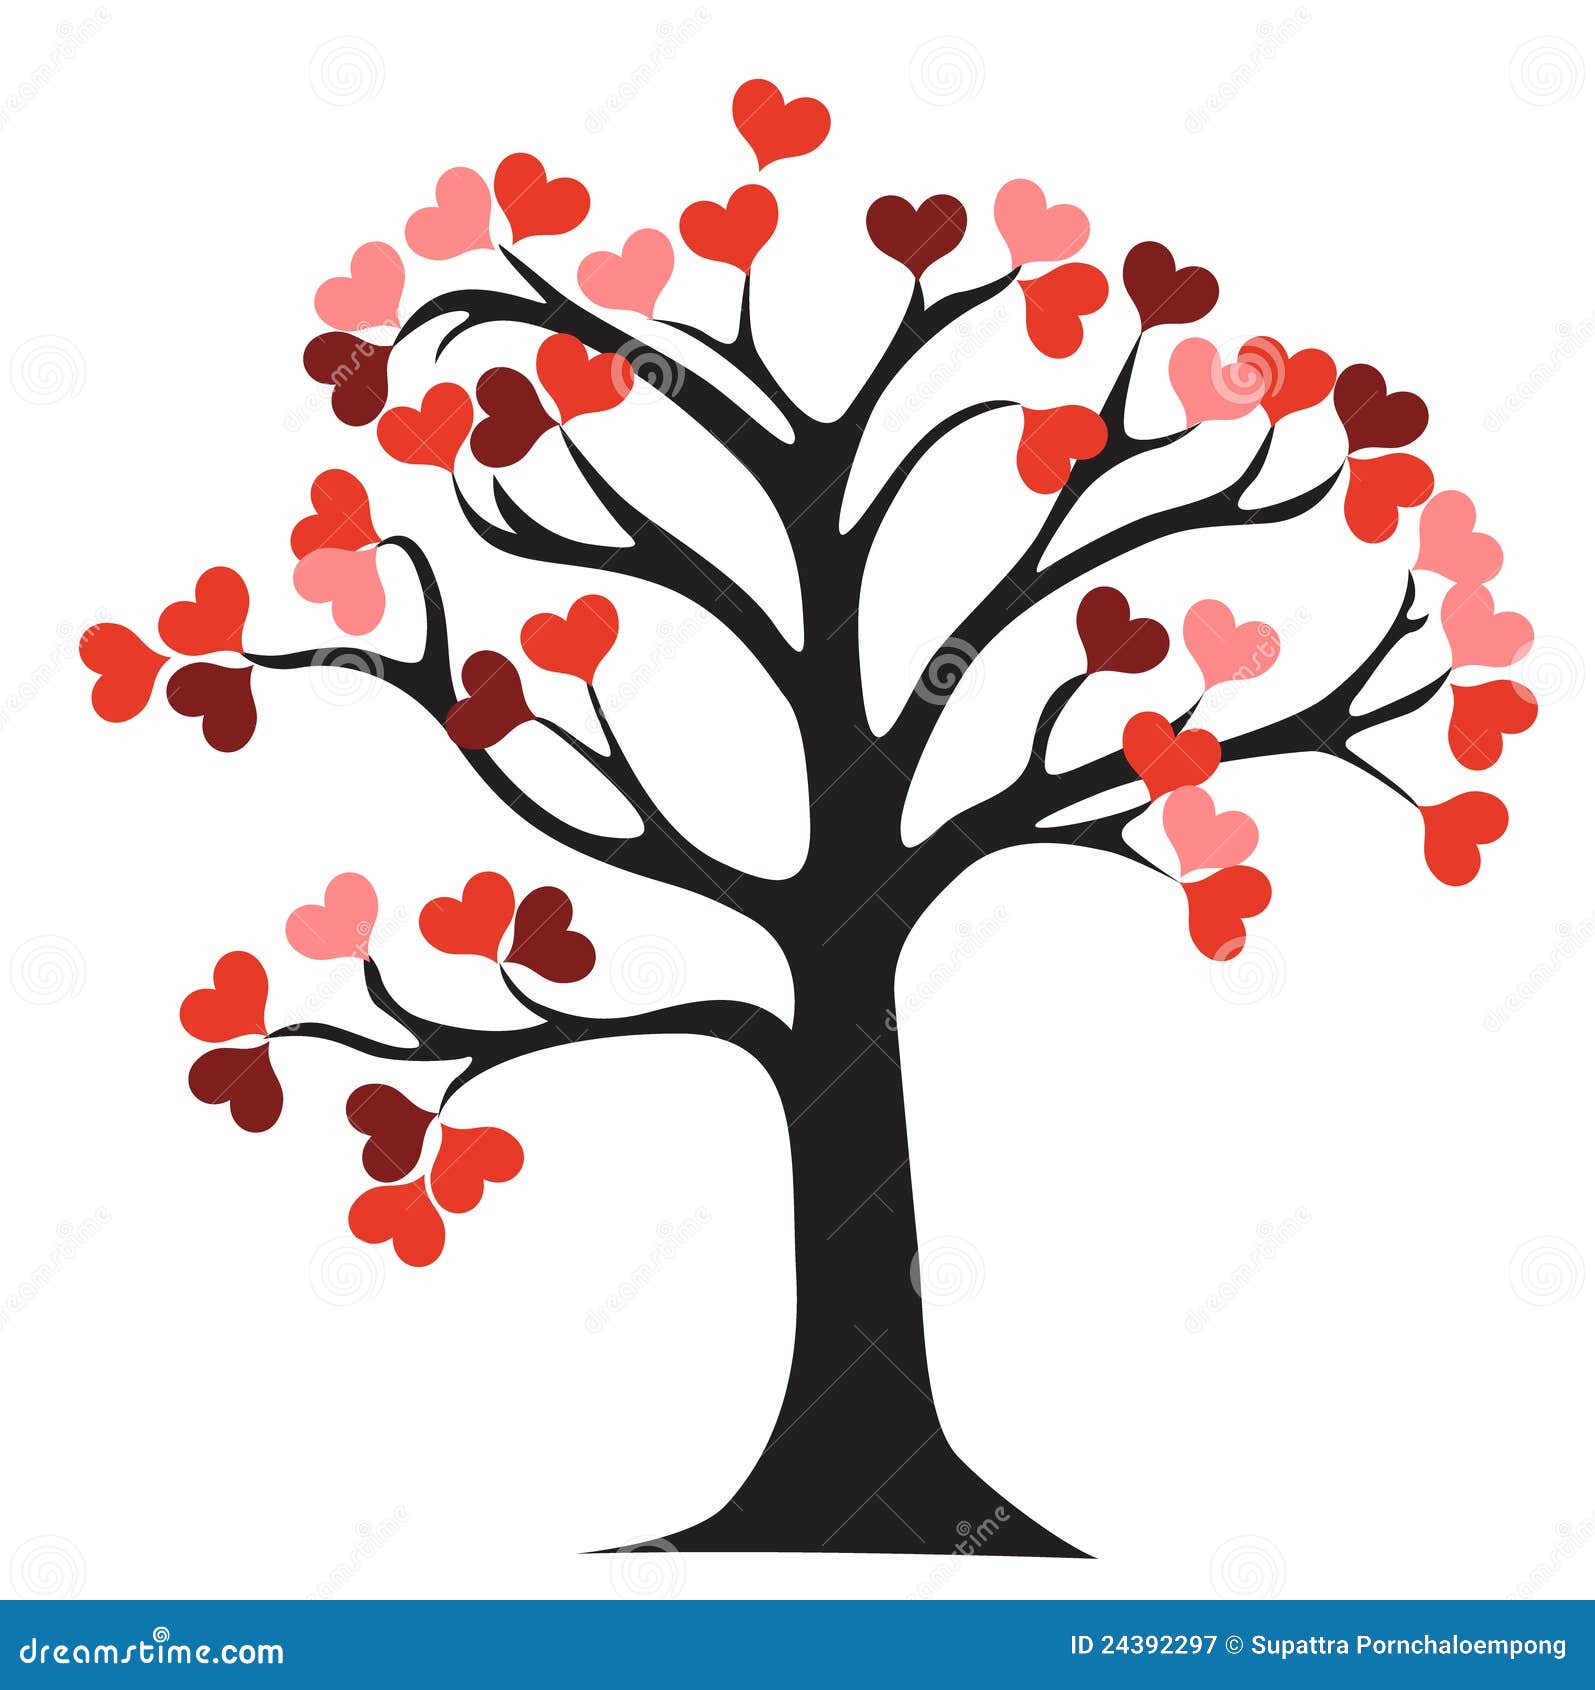 Love Tree Royalty Free Stock Photography - Image: 24392297